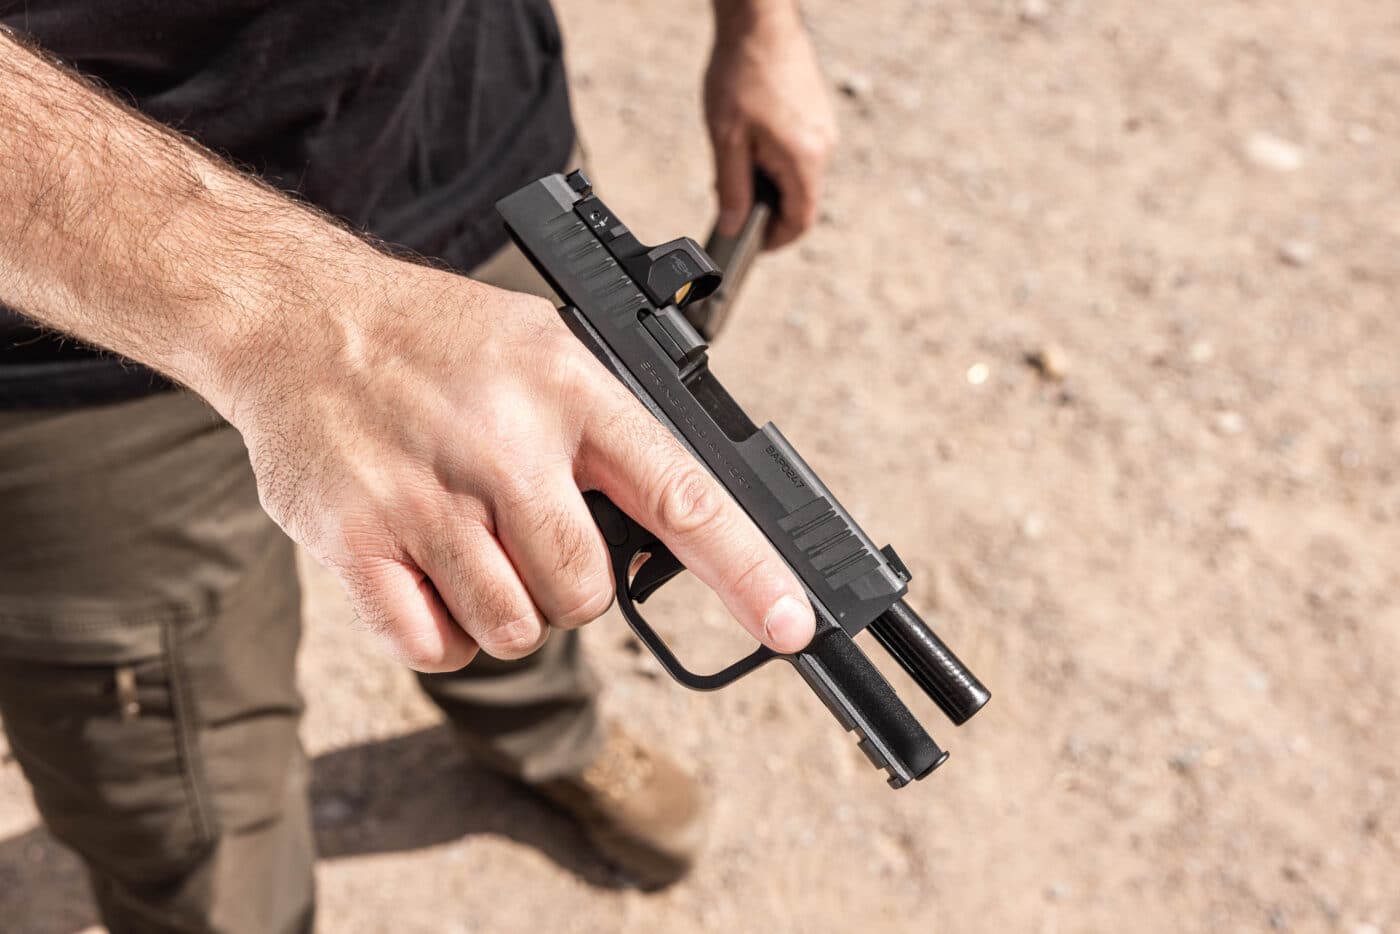 Man holding Springfield Armory Hellcat Pro pistol with slide locked back